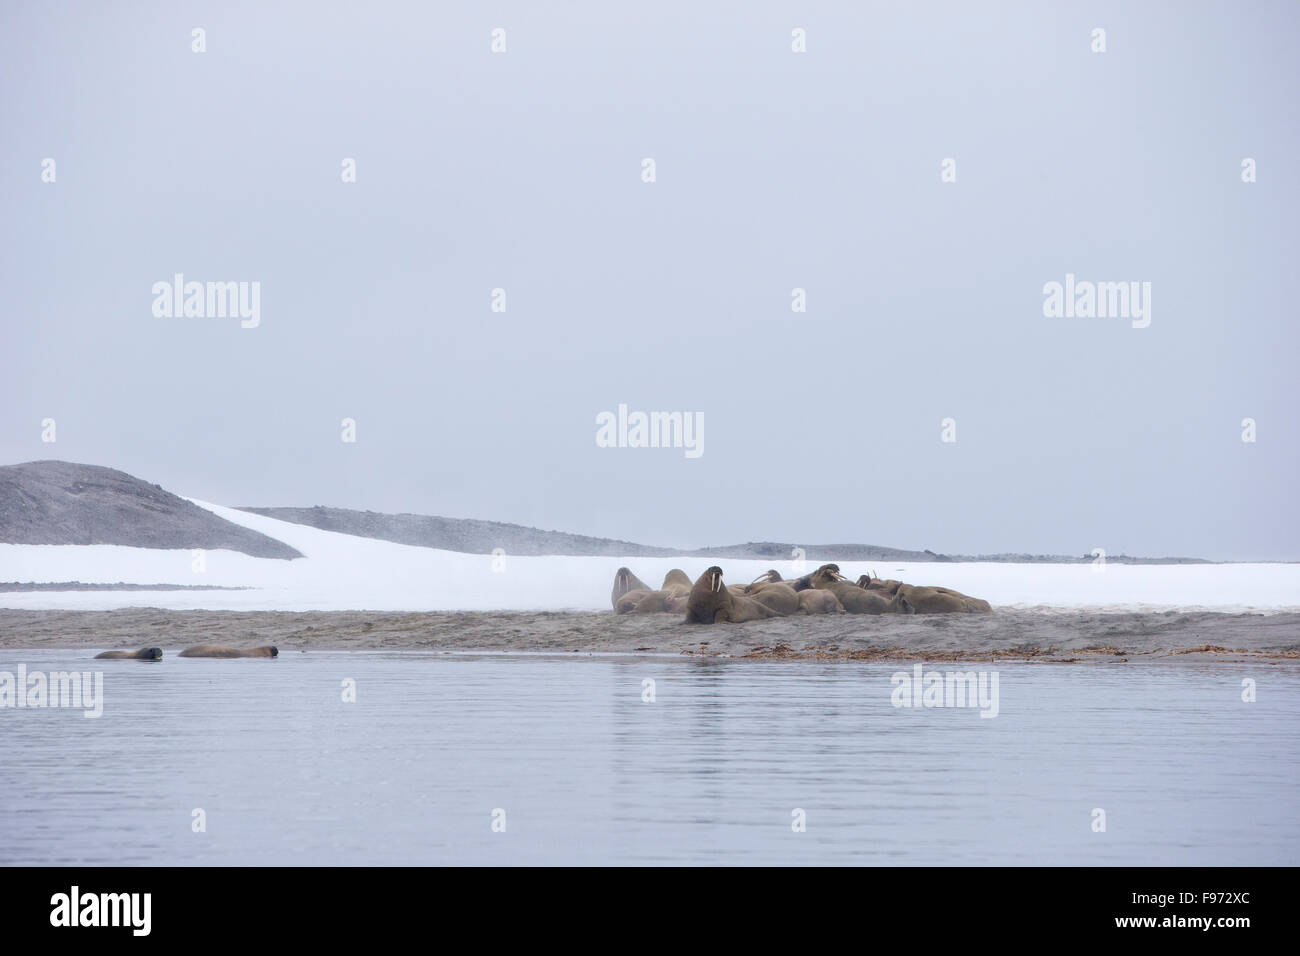 Atlantic walrus (Odobenus rosmarus rosmarus), at haulout, Magdalenefjorden, Svalbard Archipelago, Arctic Norway. Stock Photo